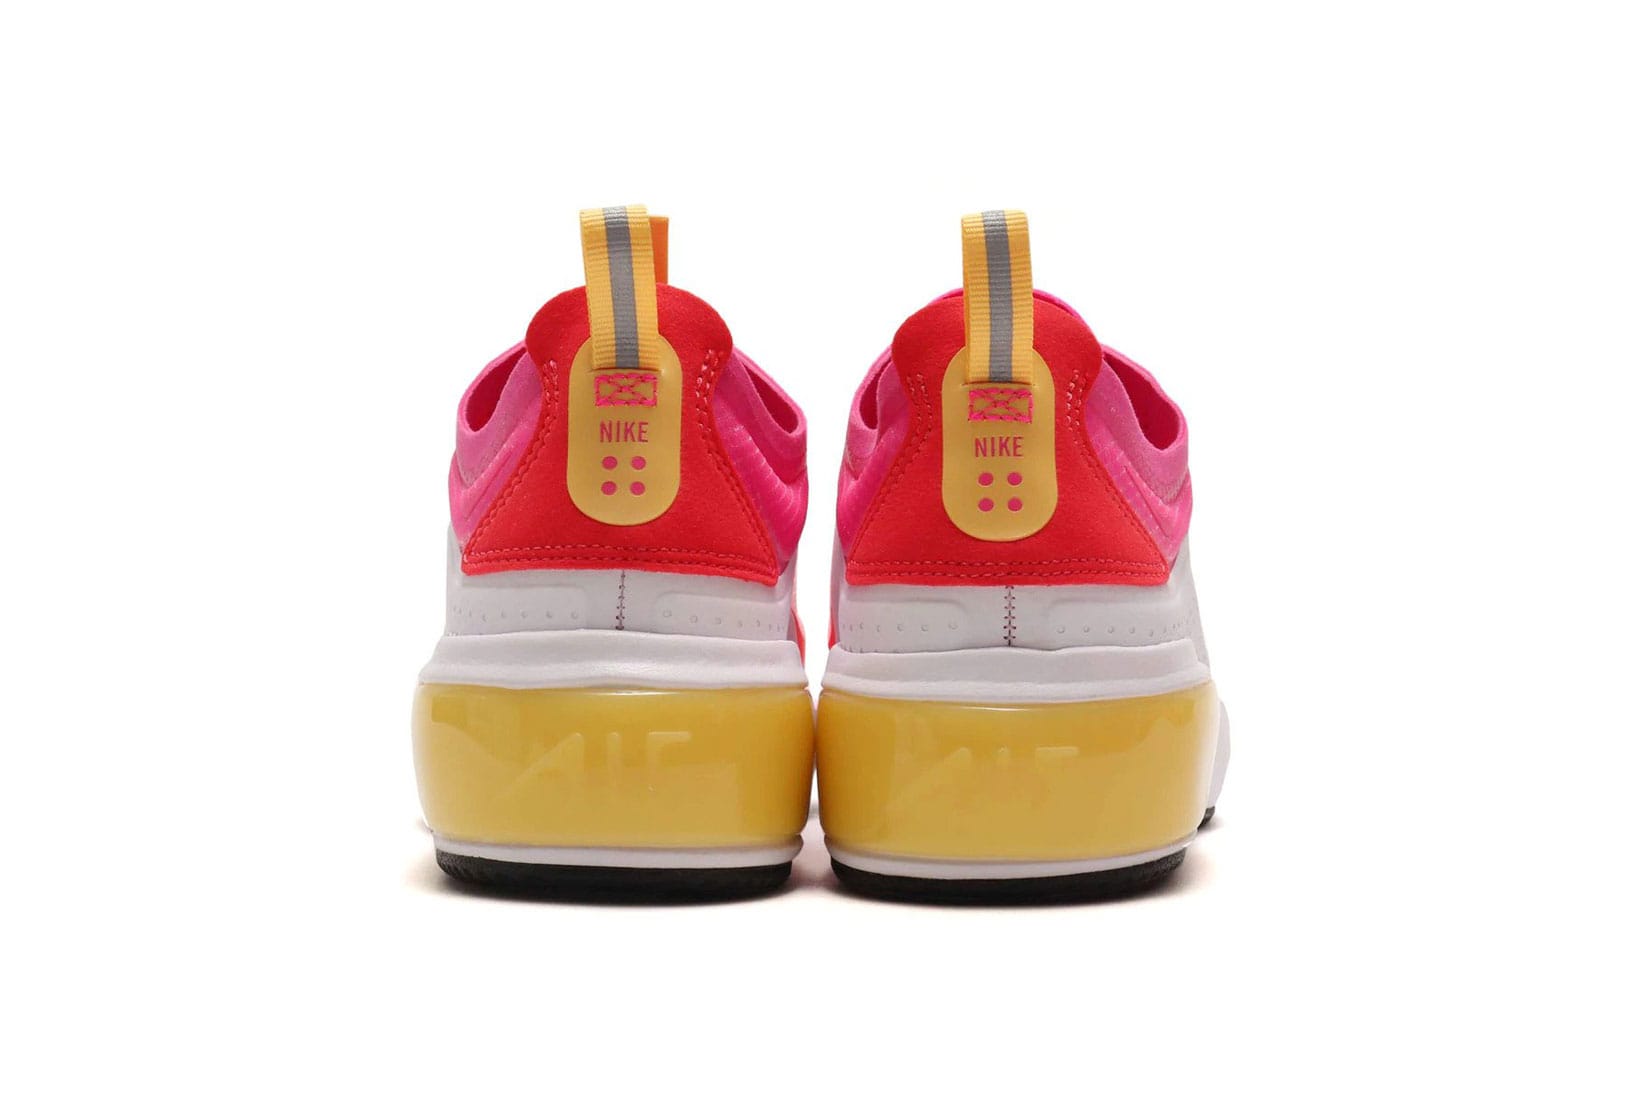 Nike's Air Max Dia SE in Pink, Yellow 